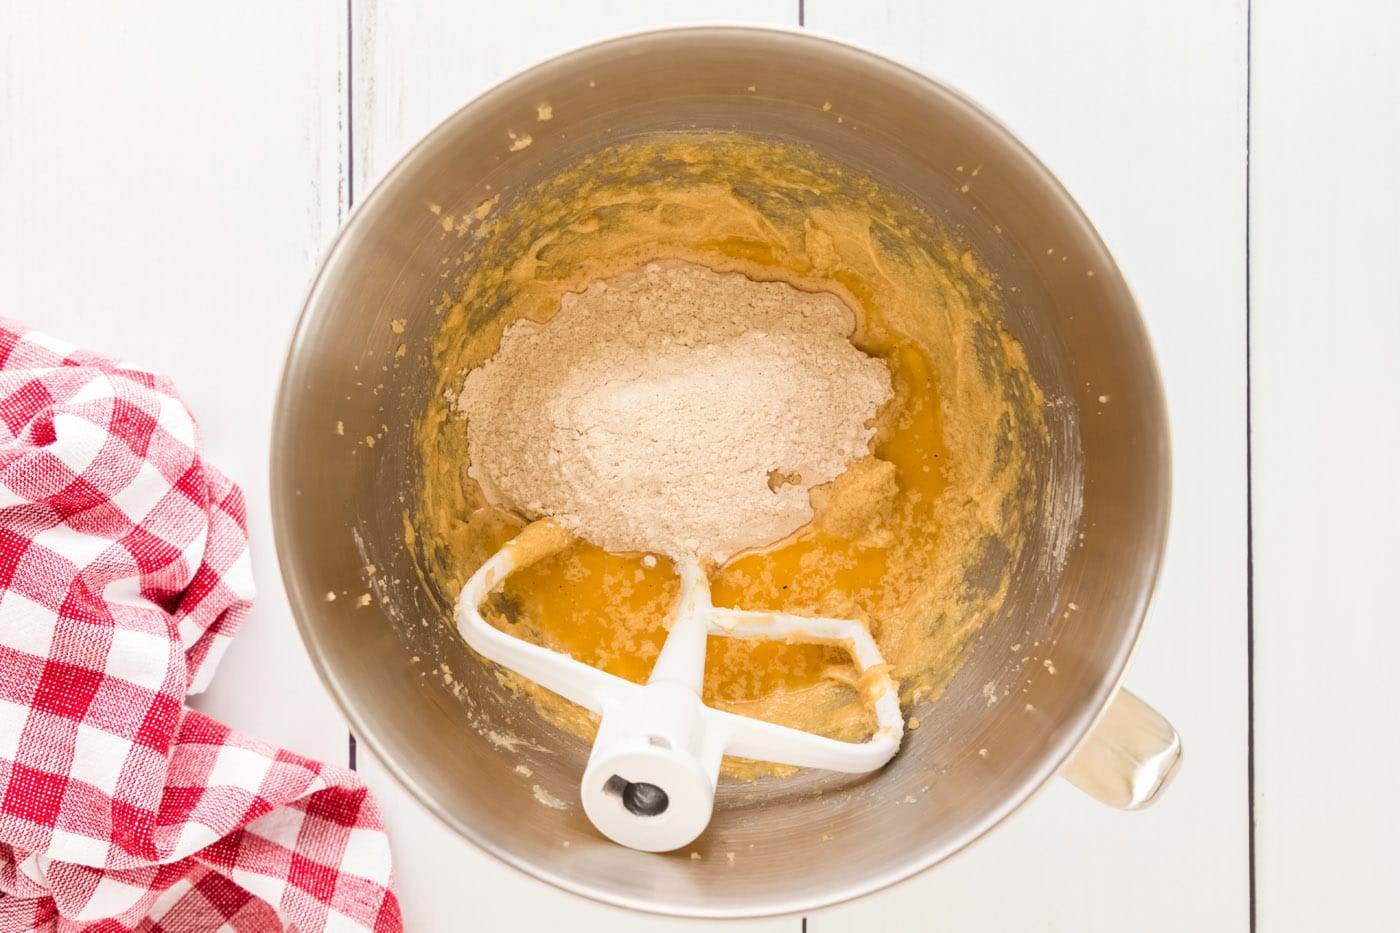 flour mixture and orange juice added to loaf batter